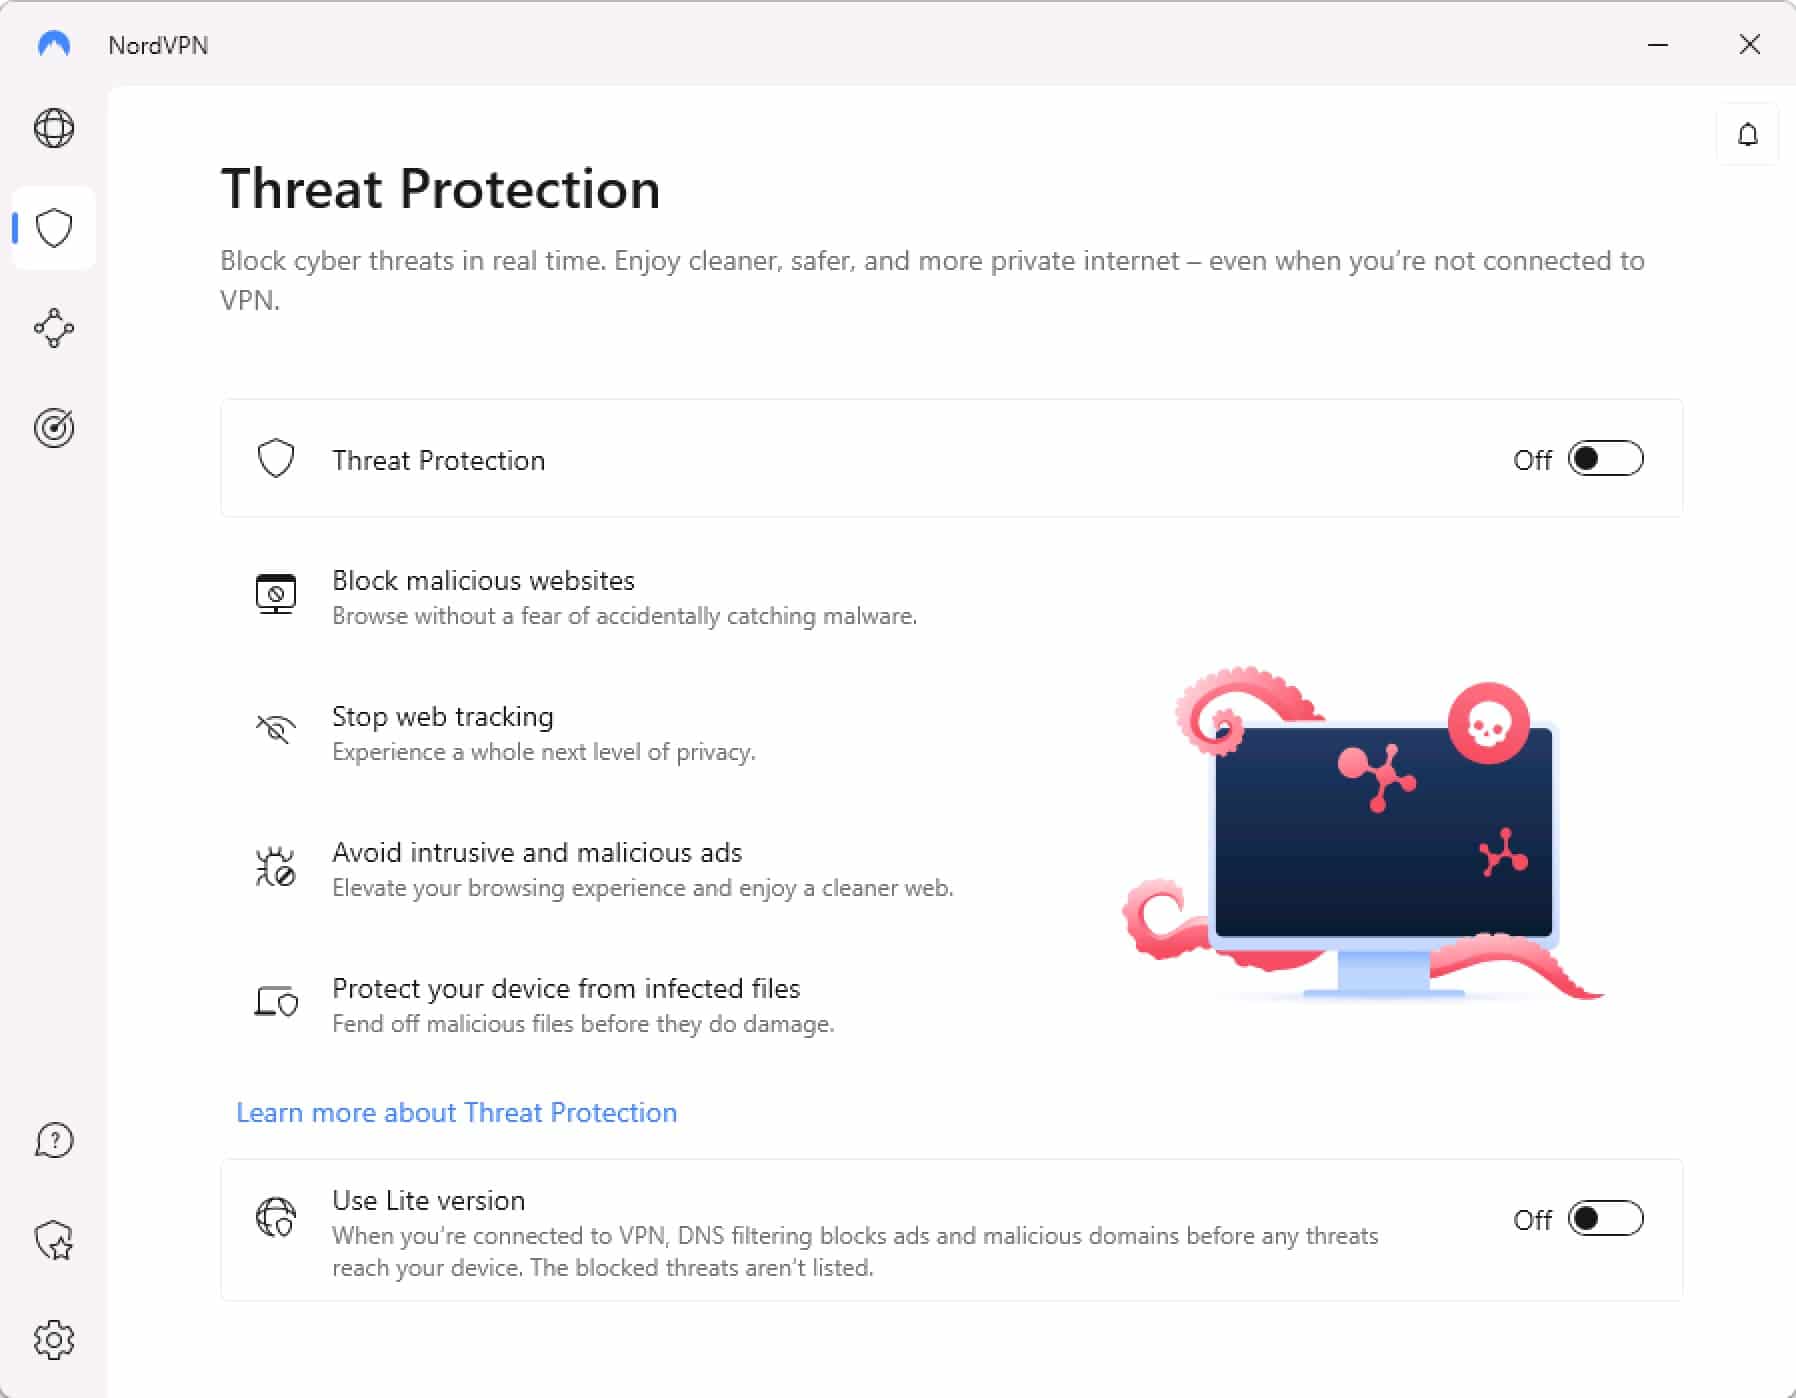 NordVPN - Threat Protection